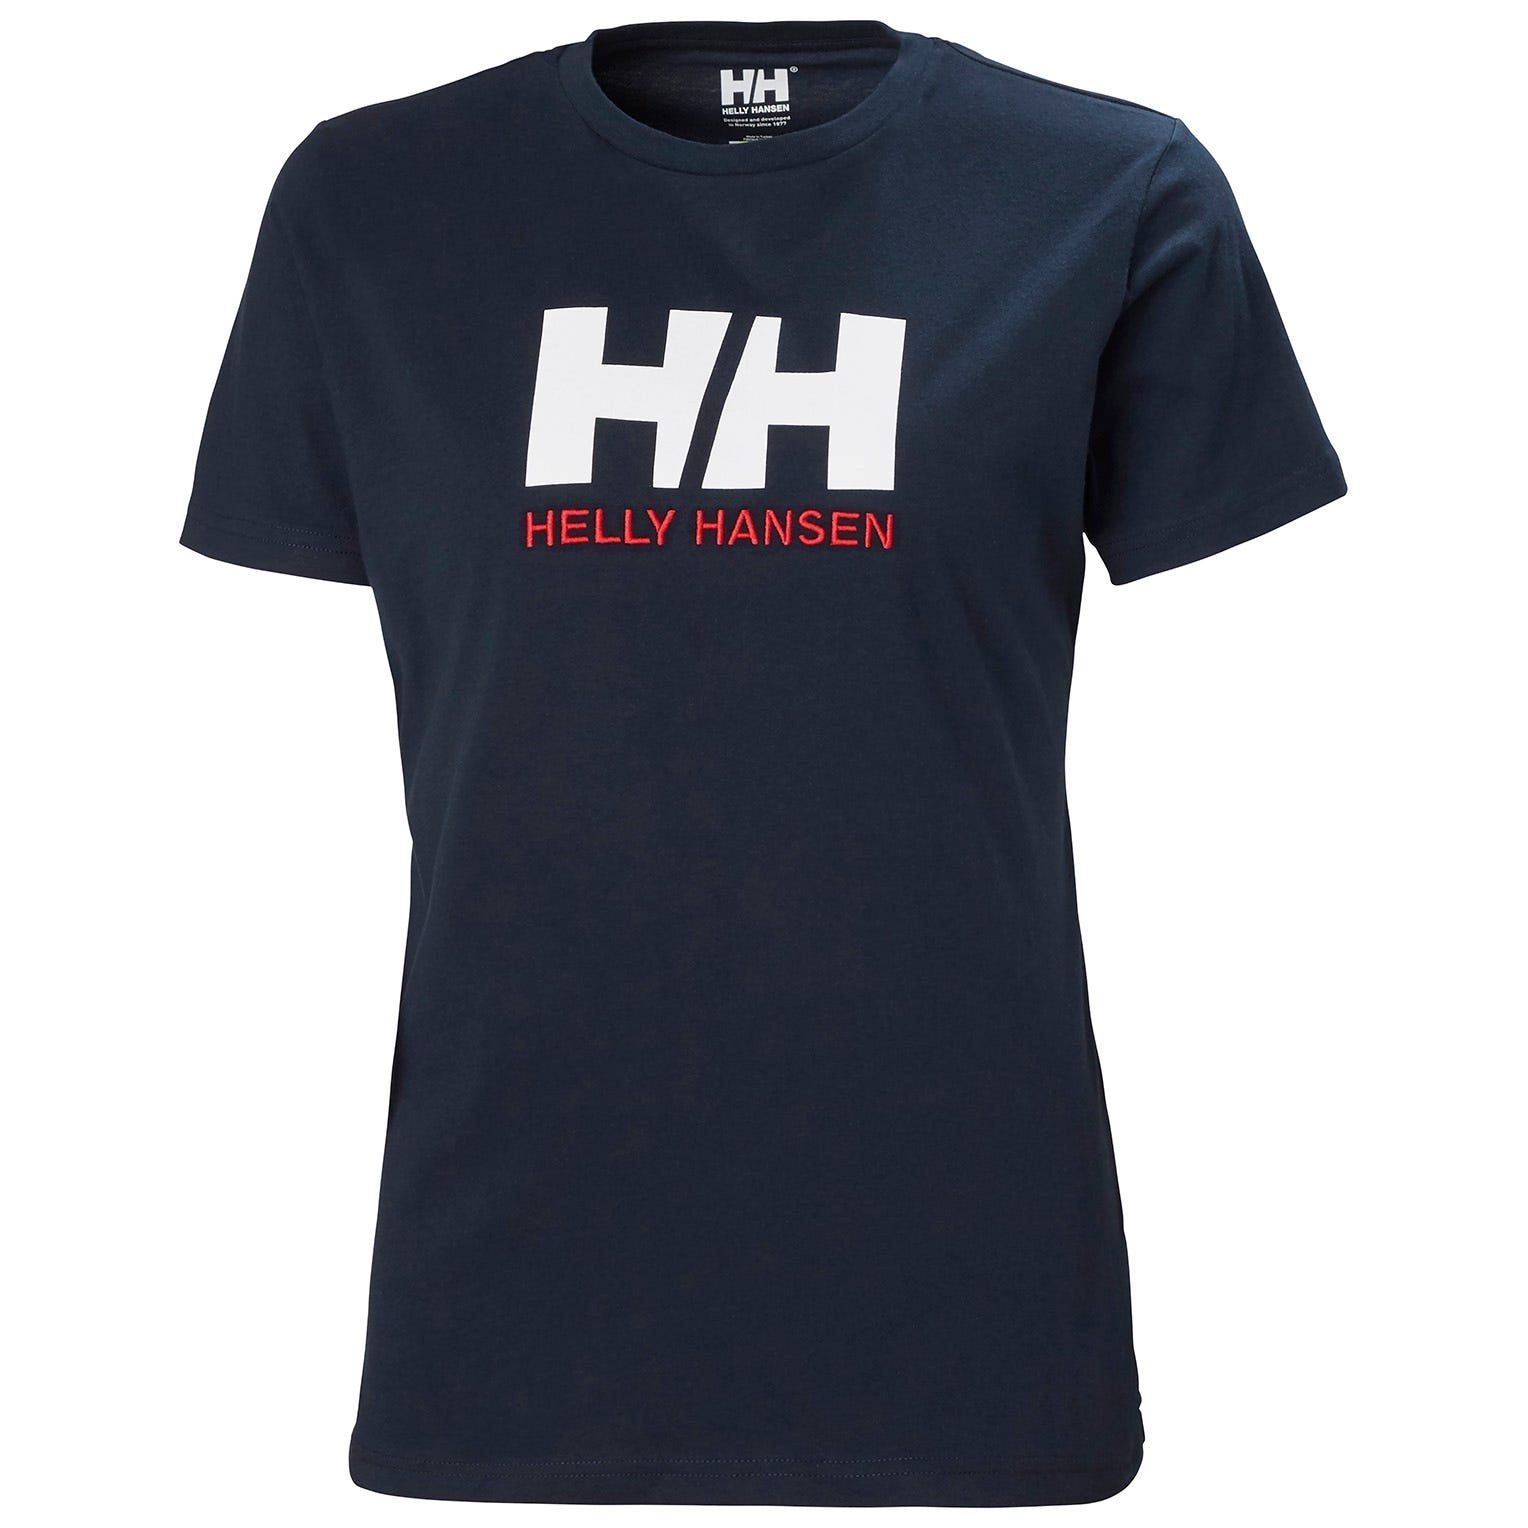 Helly Hansen Thalia W 34350 597 T-shirt – Your Sports Performance